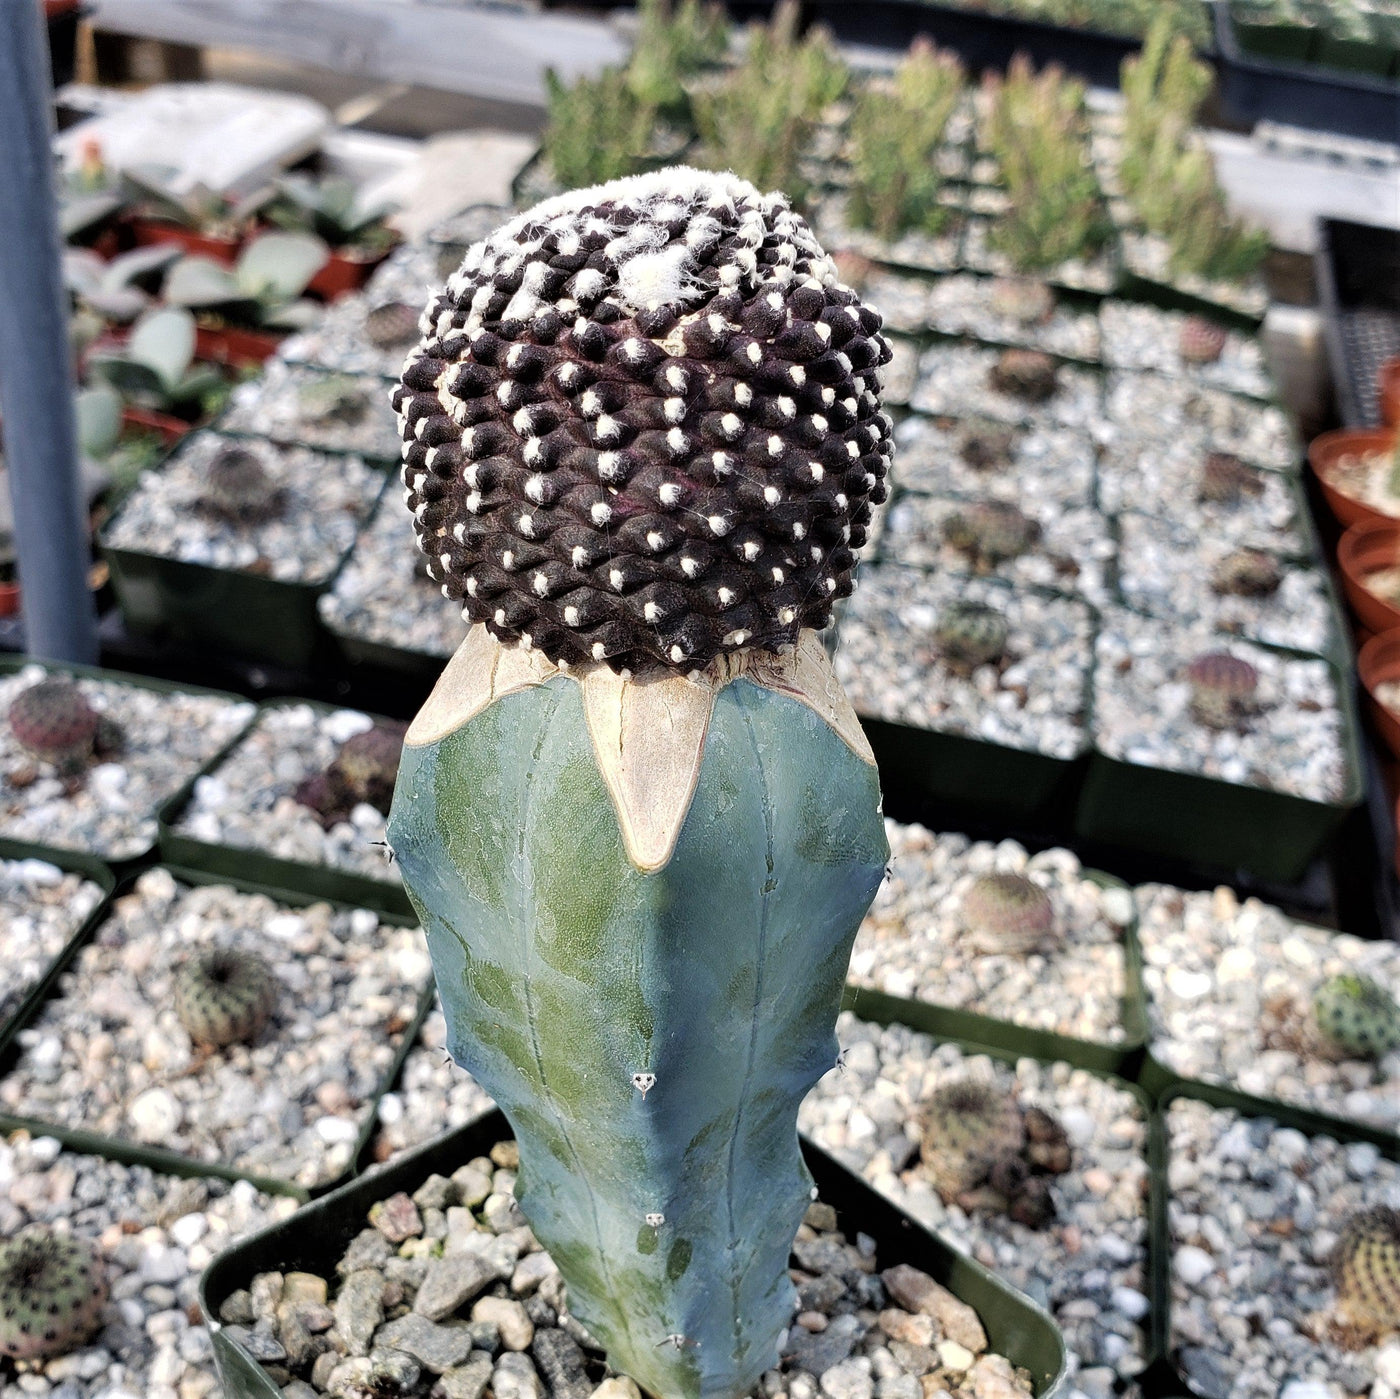 Copiapoa tenuissima grafted Large